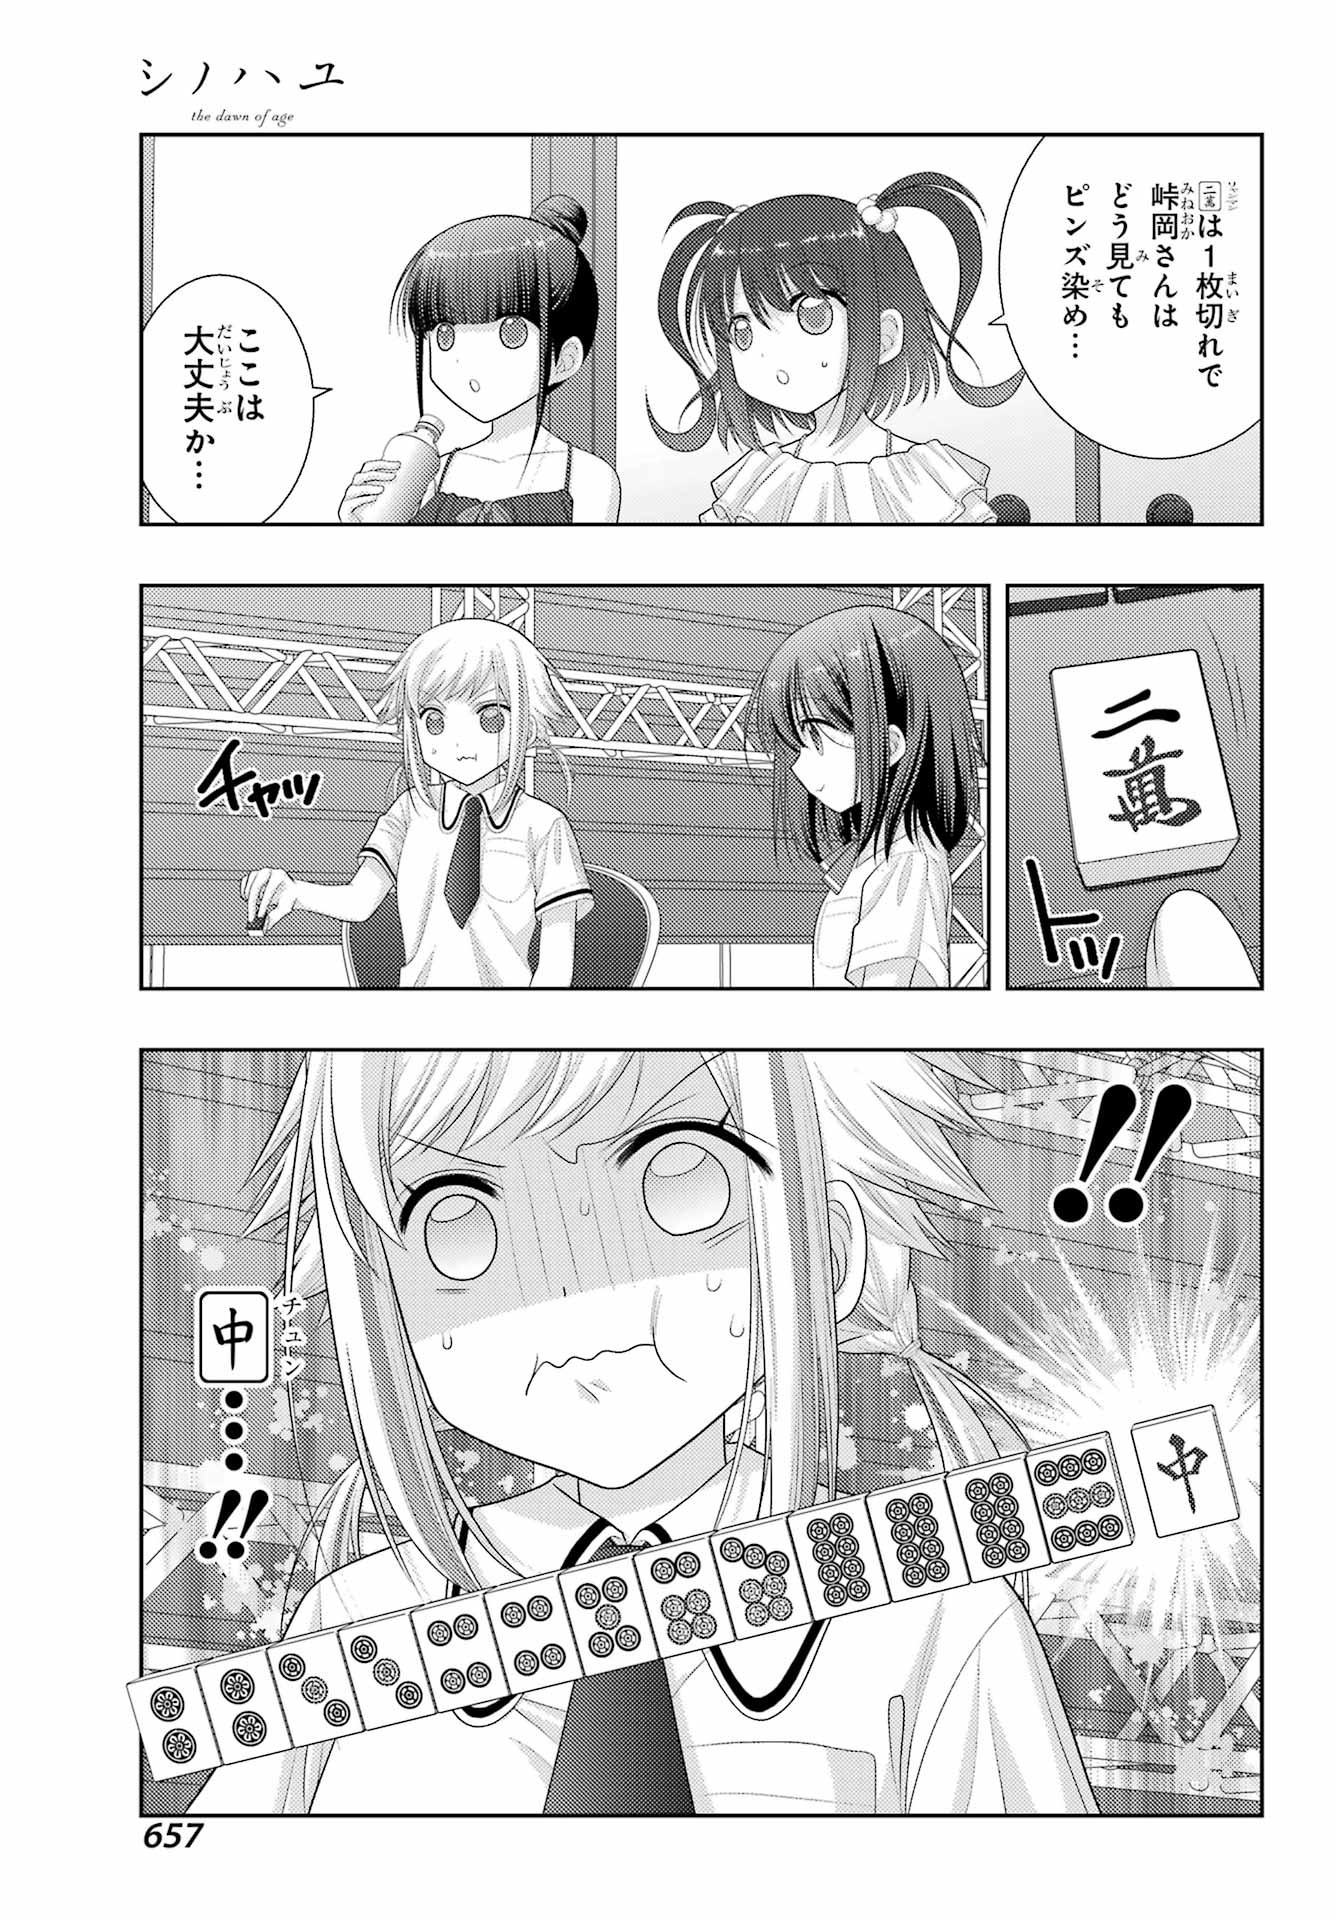 Shinohayu - The Dawn of Age Manga - Chapter 099 - Page 3